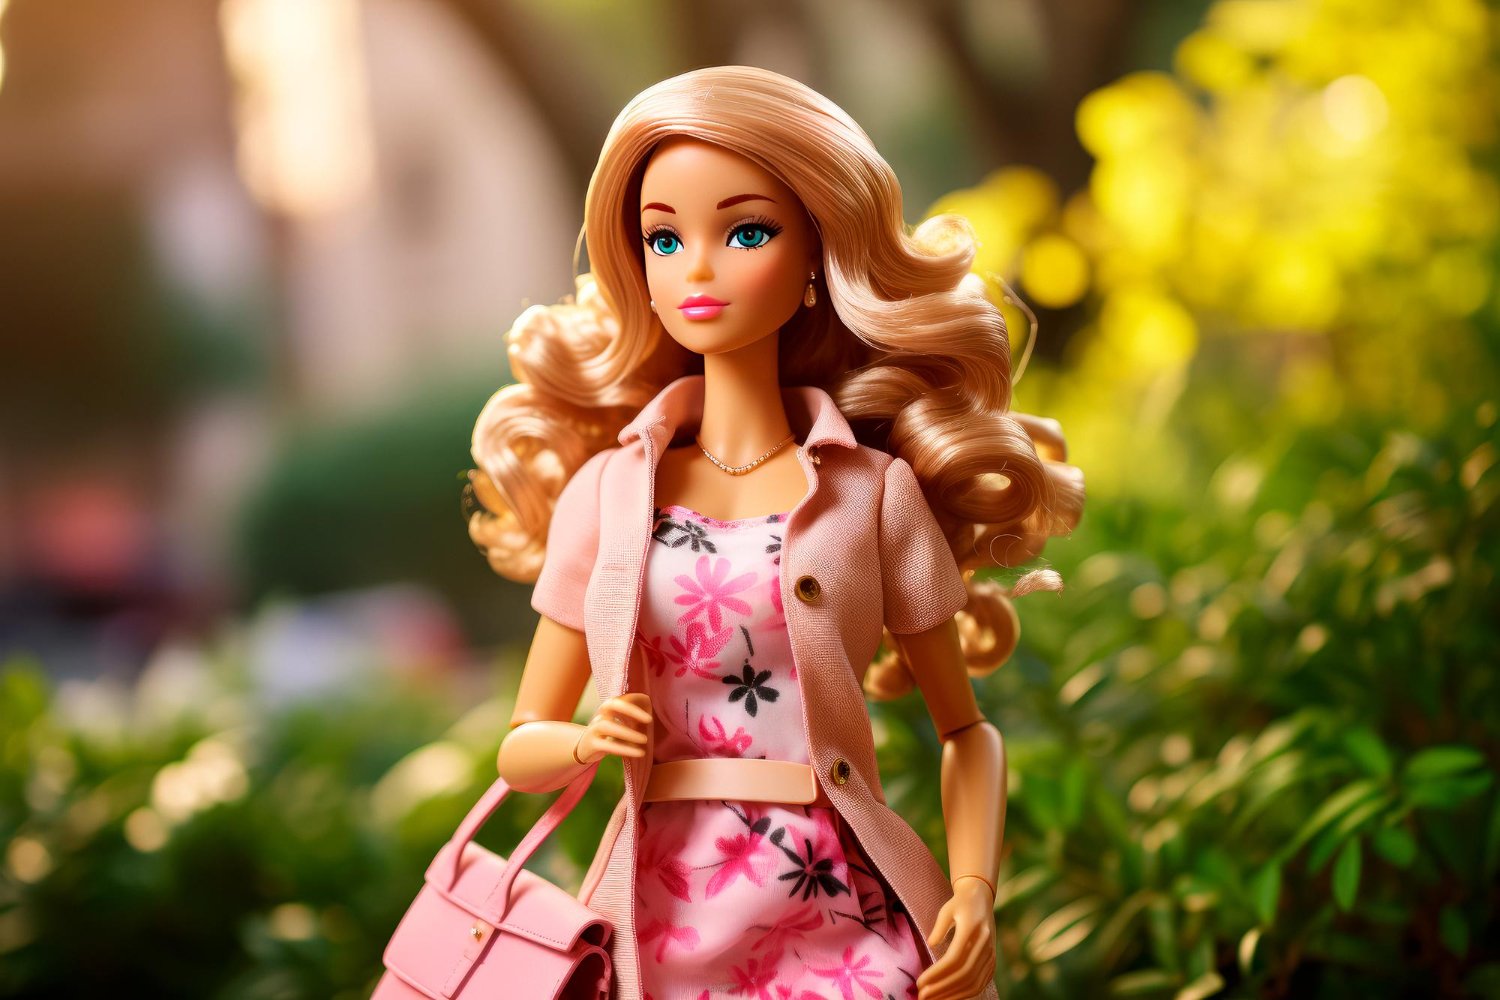 image stylish blonde doll outside wearing floral dress